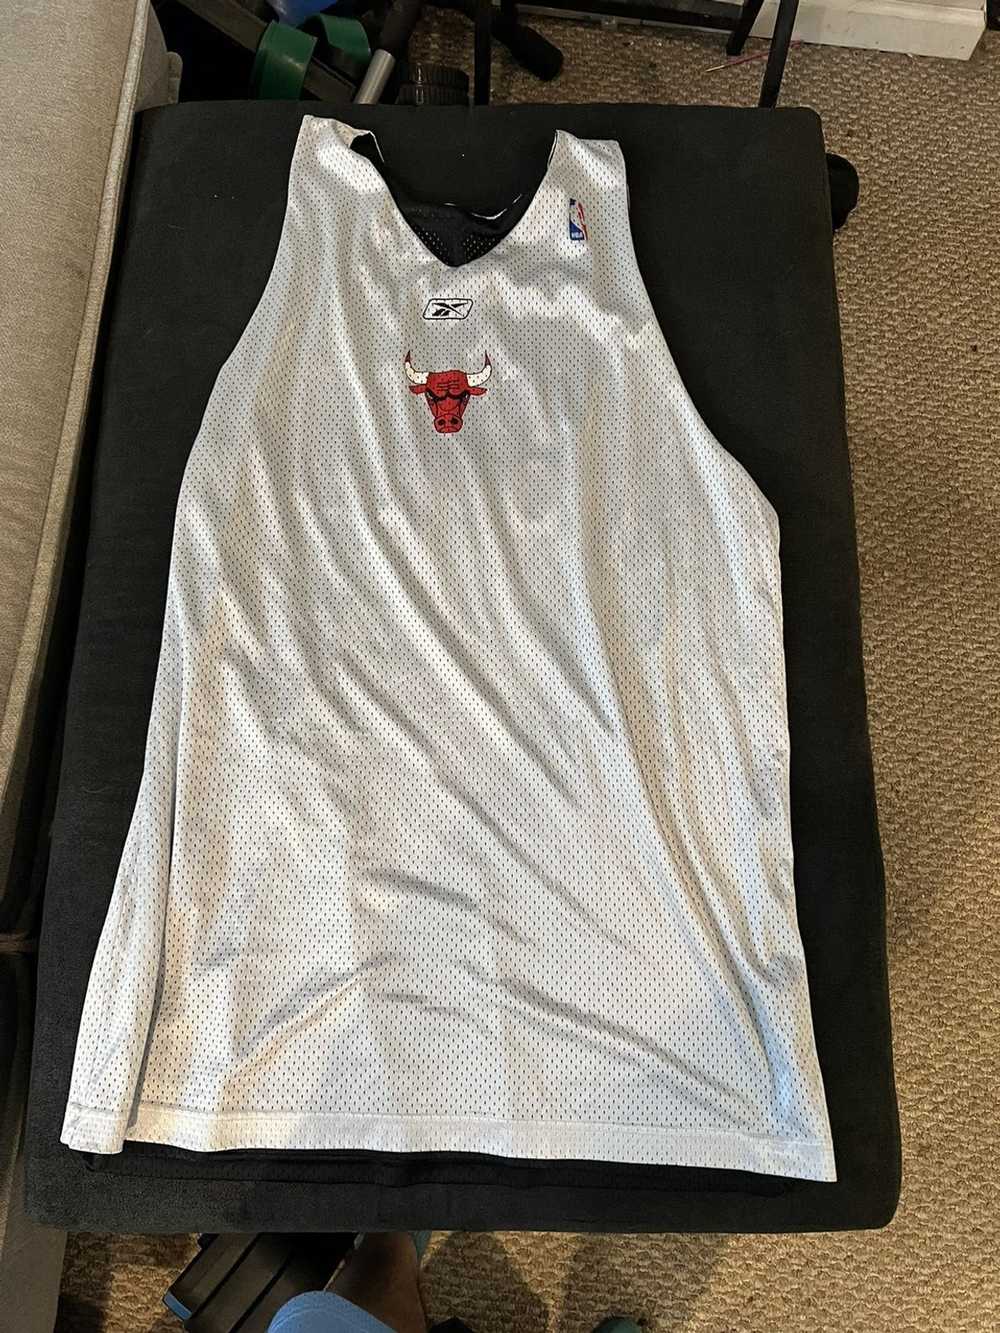 Reebok Bulls issued practice jersey - image 4